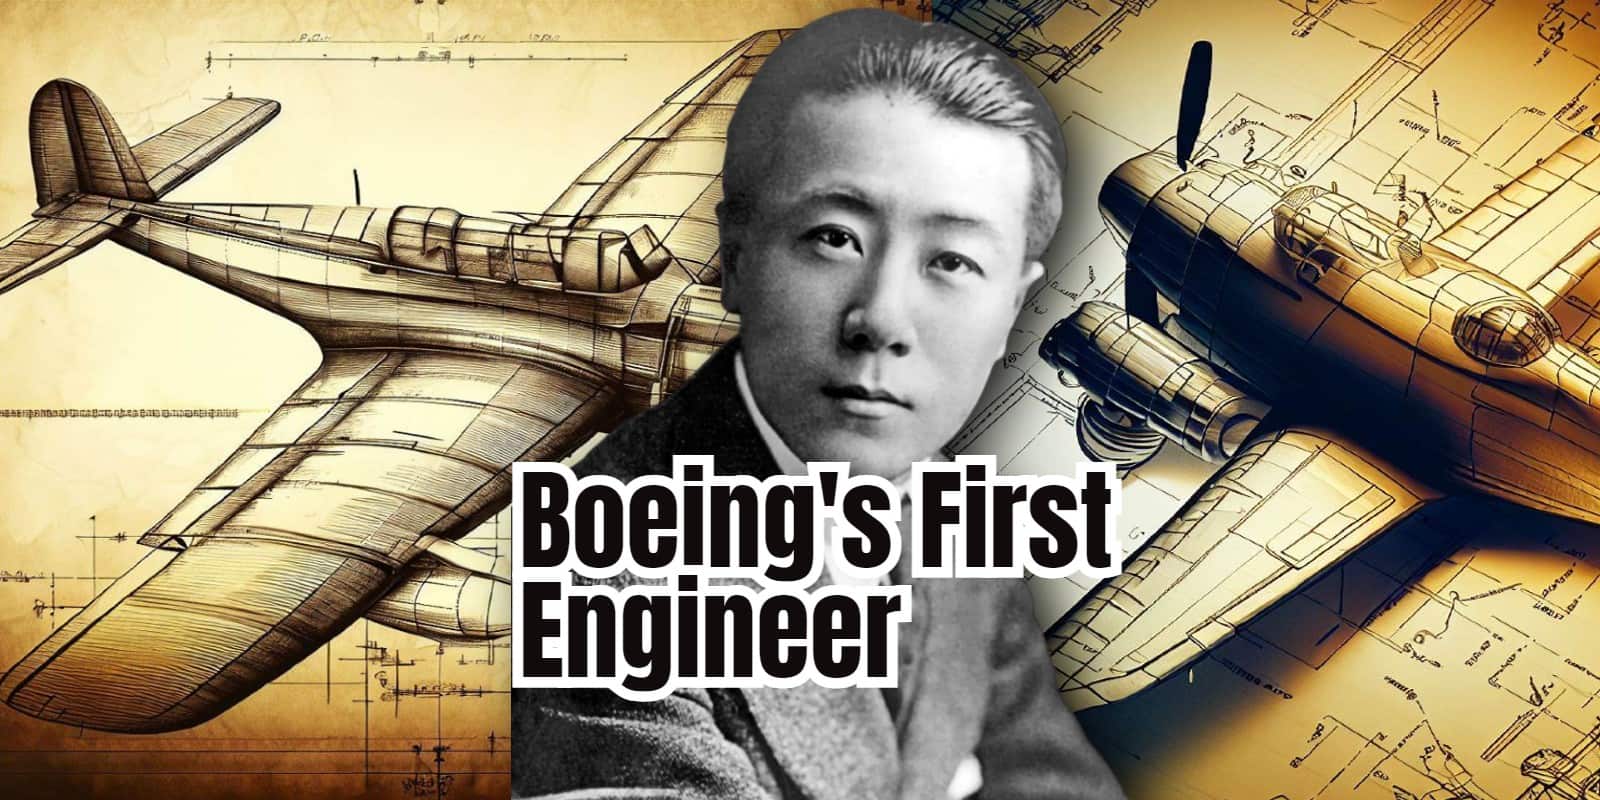 Boeing's first engineer, Wong Tsu.